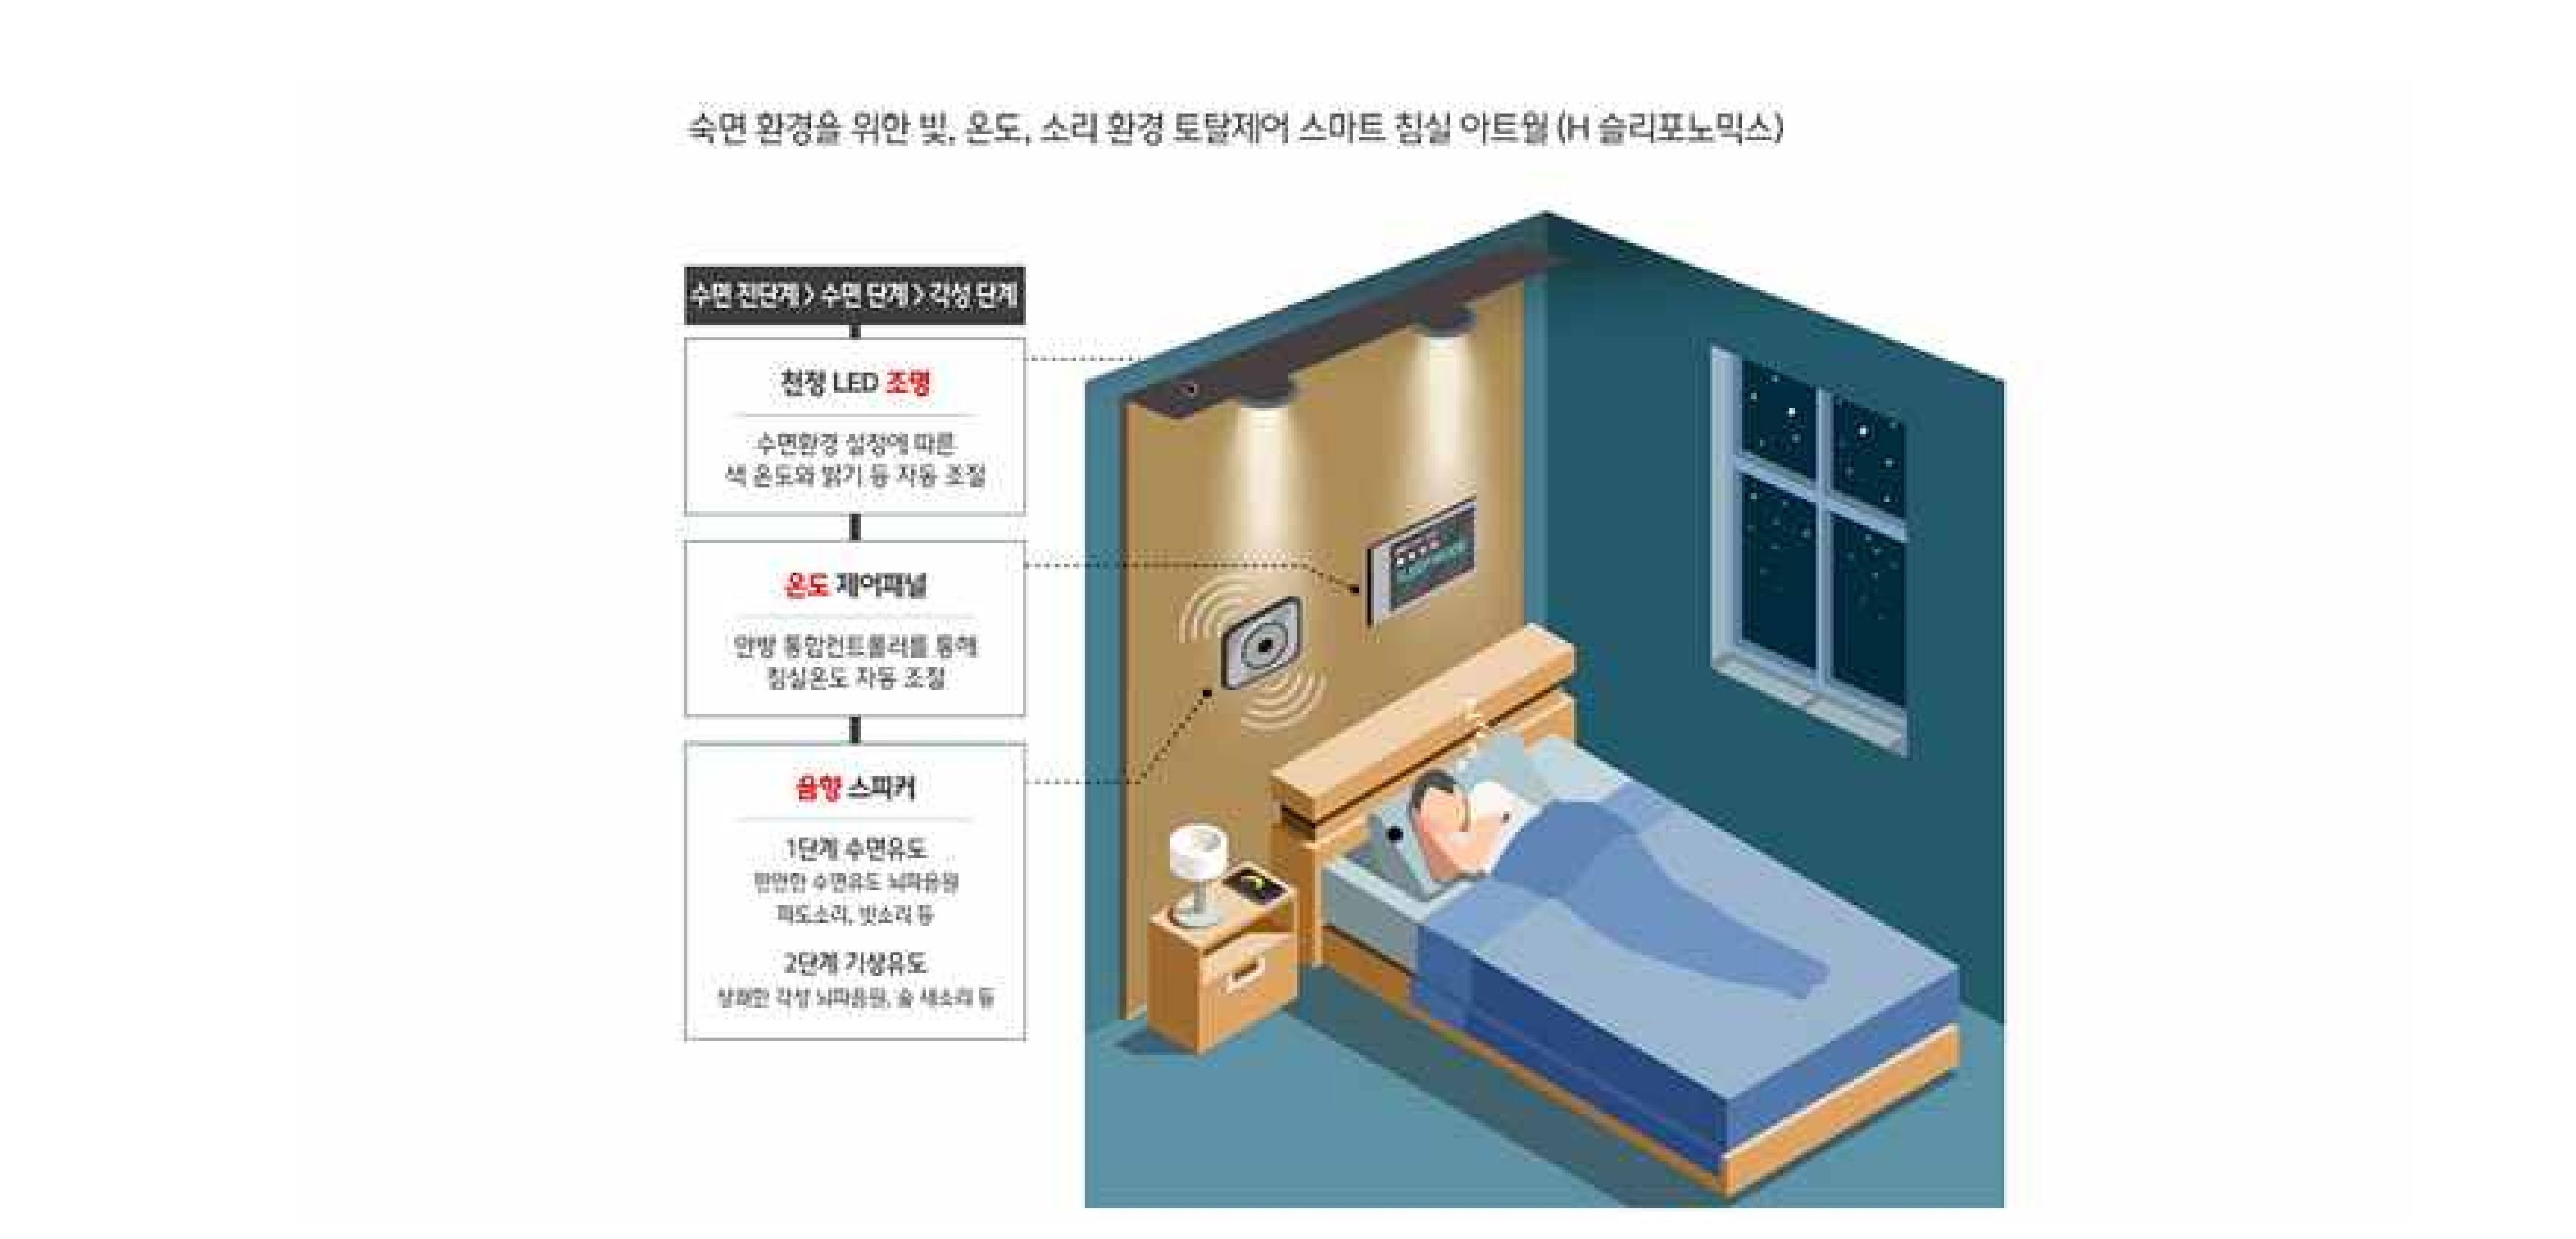 〔ANN의 뉴스 포커스〕침실 아트월에서 빛·소리·온도 조정돼 숙면을 도와주는 H슬리포노스